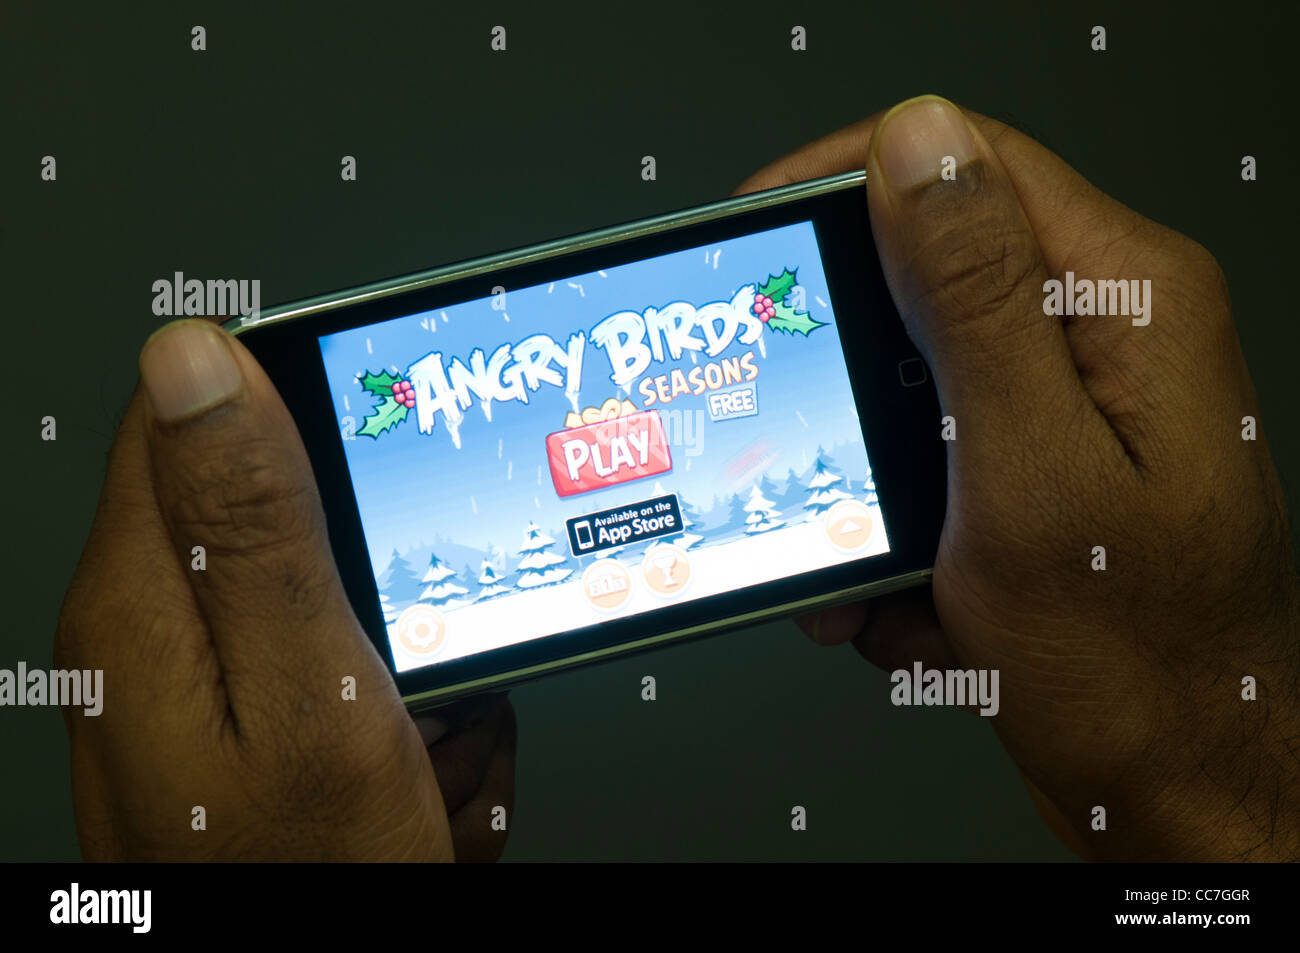 Man Angry Birds seasons jeu dans l'iphone Banque D'Images